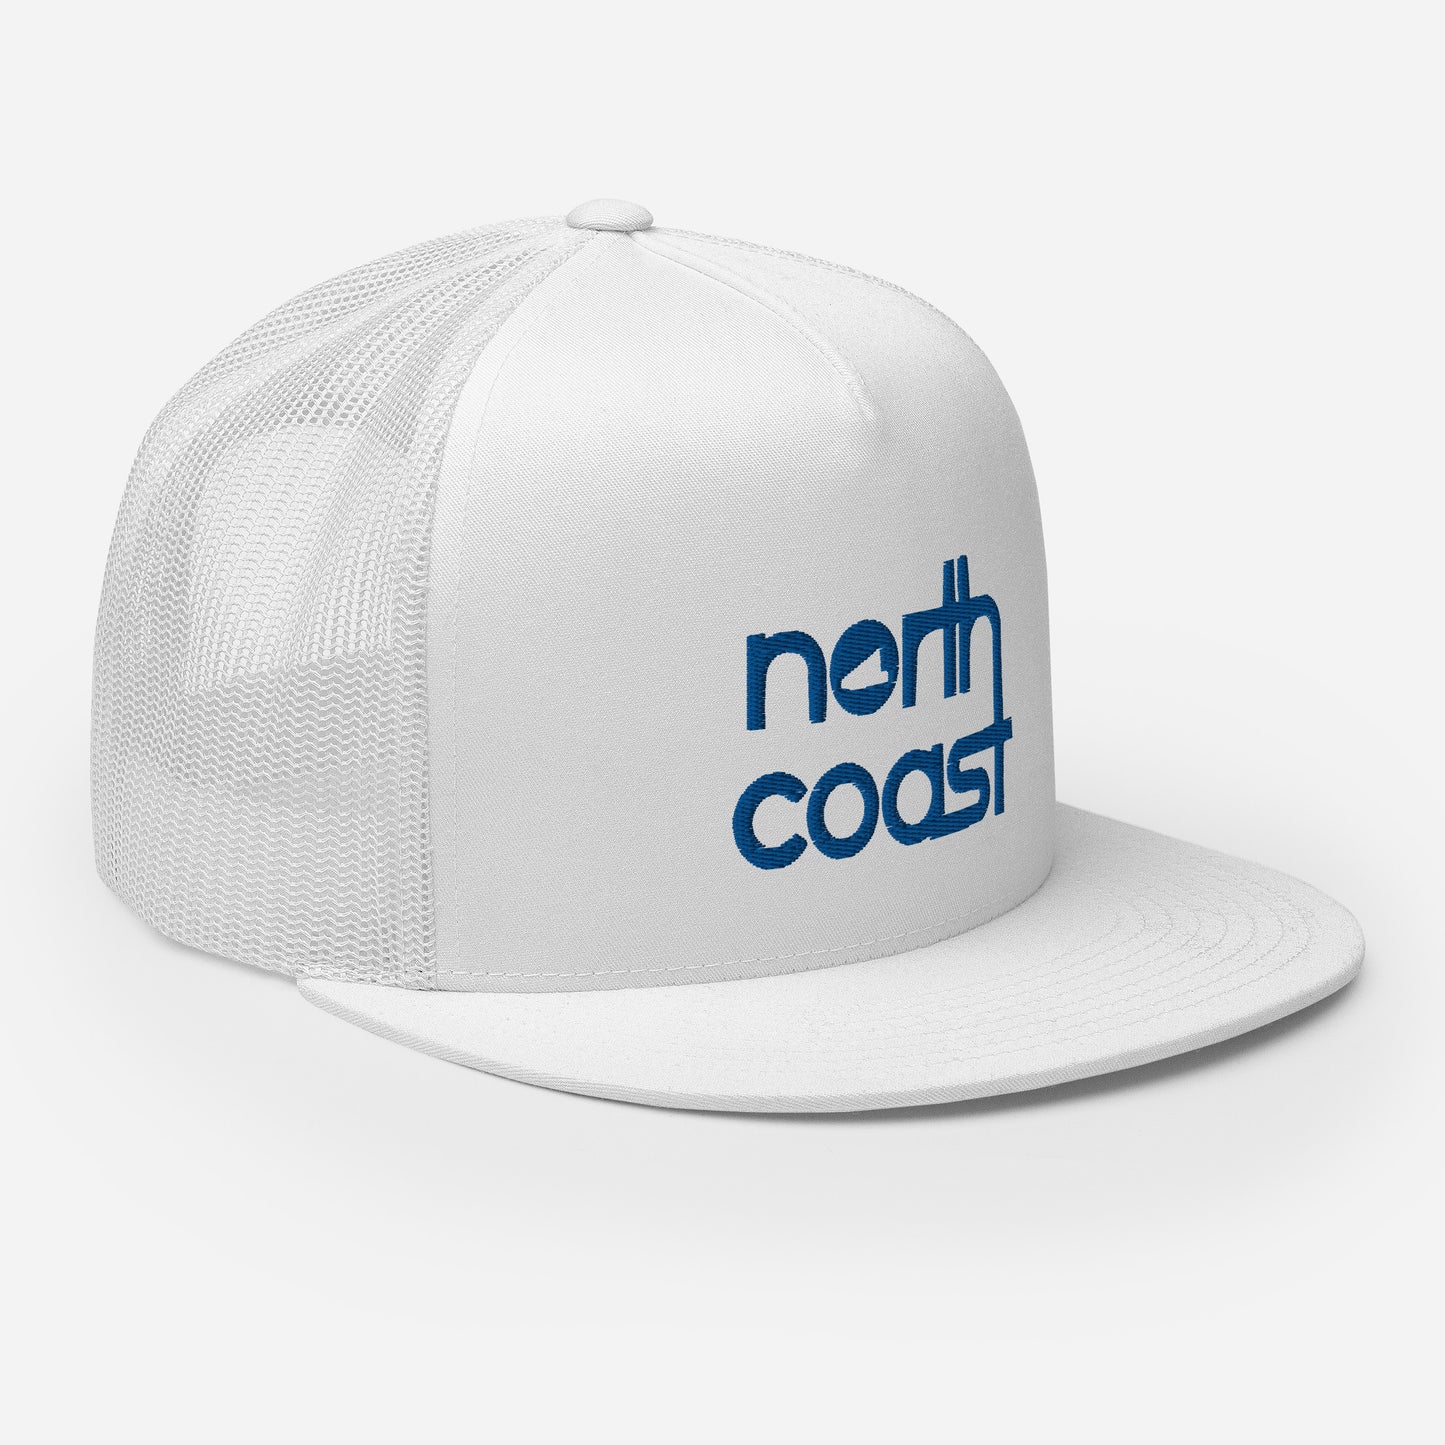 North Coast Trucker Cap (Blue Embroidery)